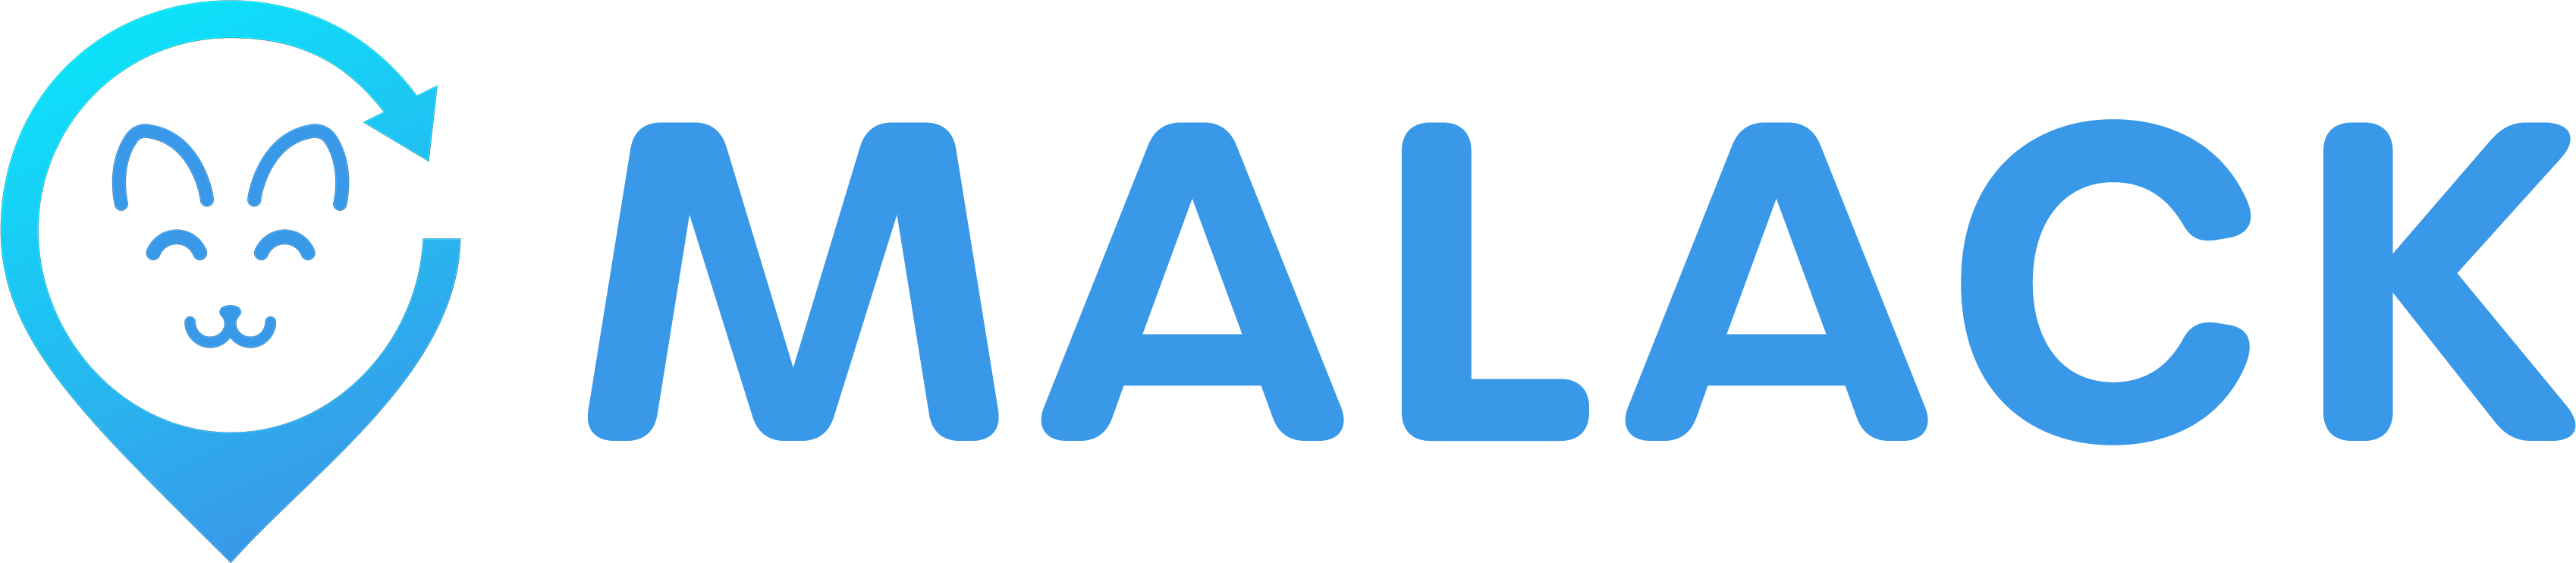 Malack app logo